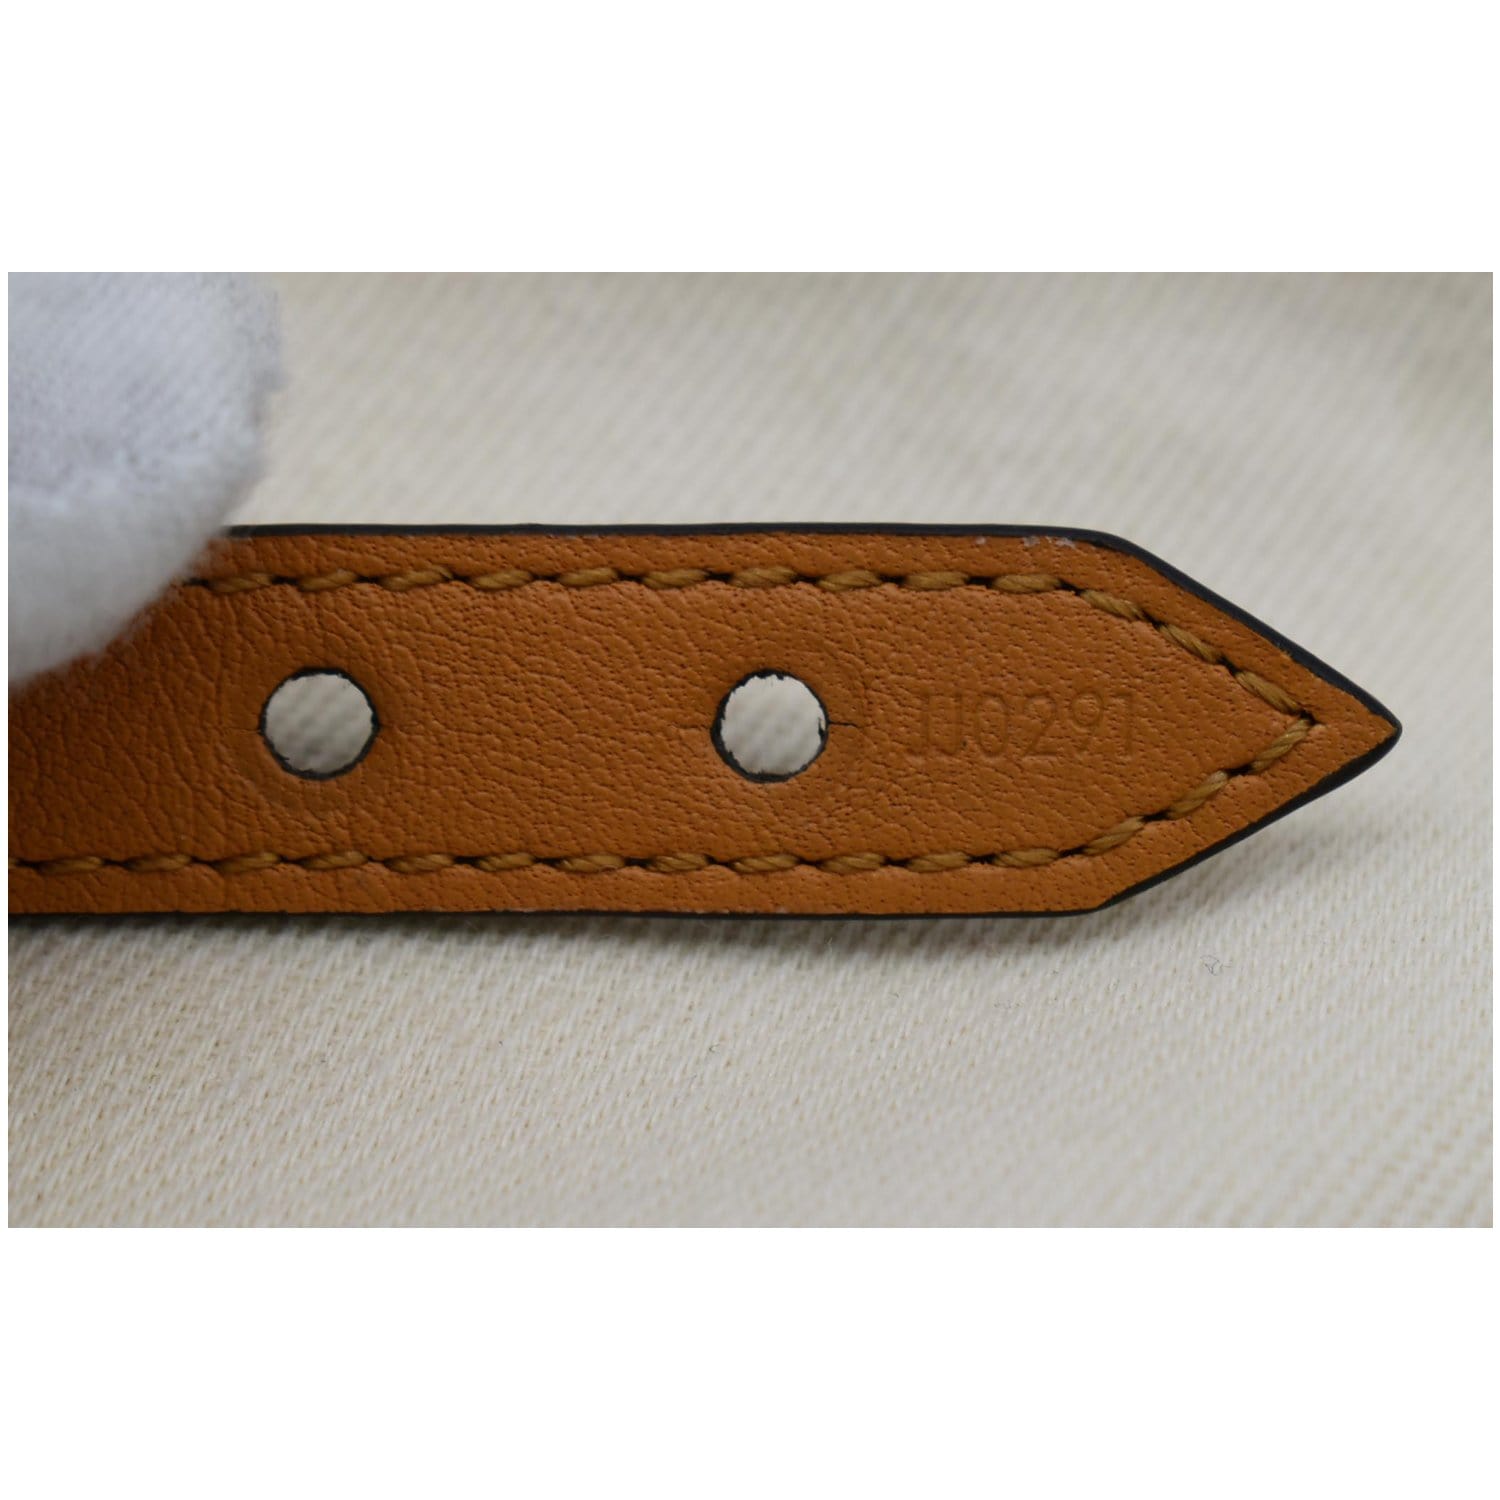 Monogram cloth bracelet Louis Vuitton Brown in Cloth - 31784517